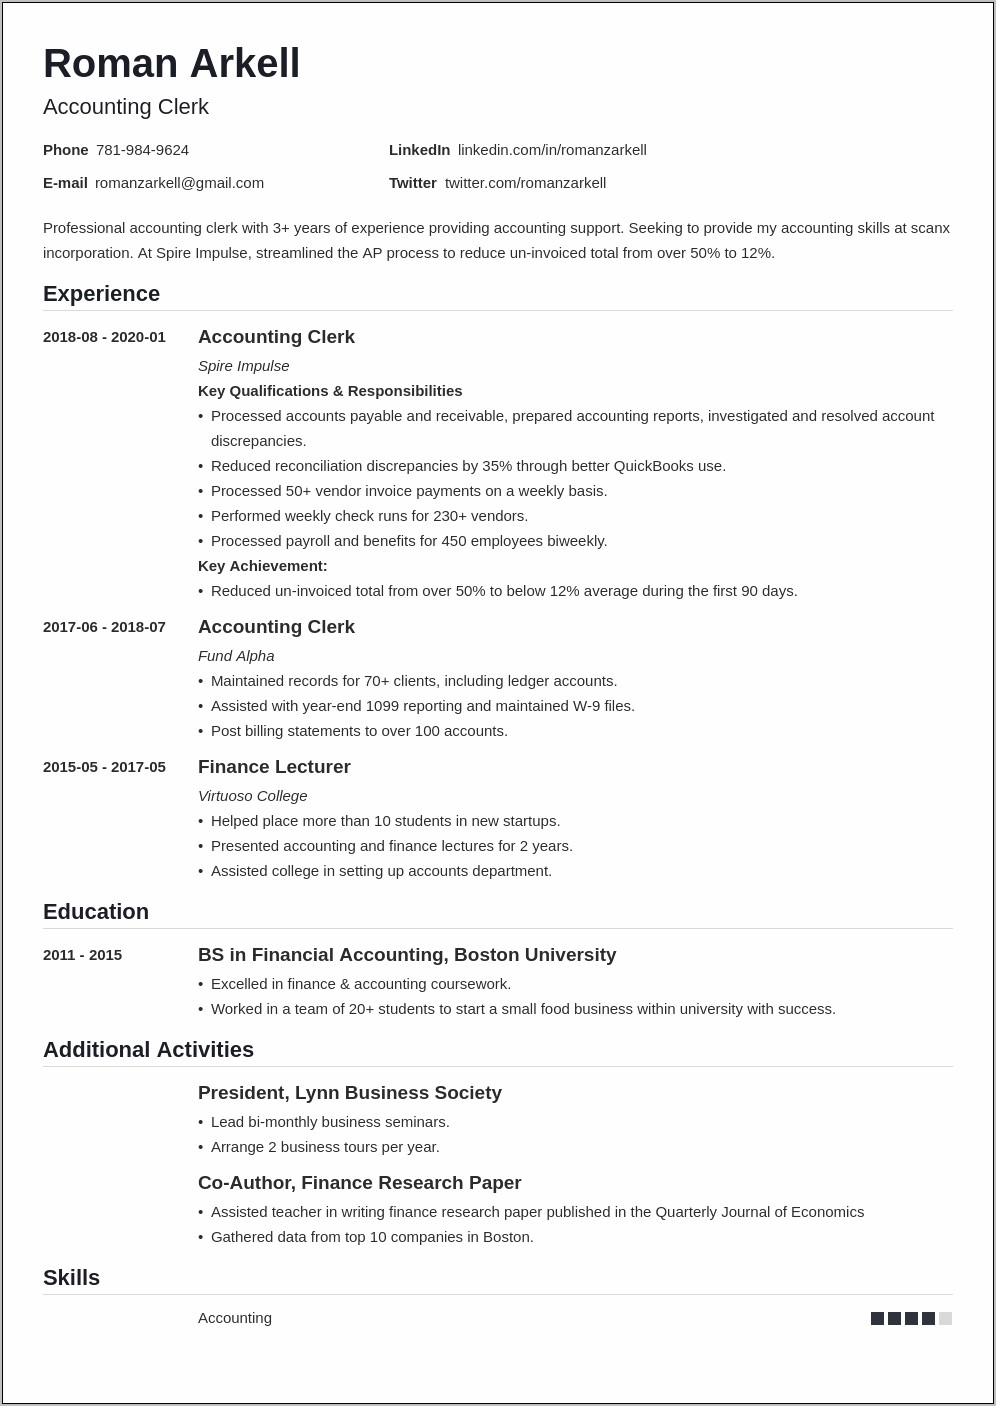 Pwc Senior Associate Resume Examples